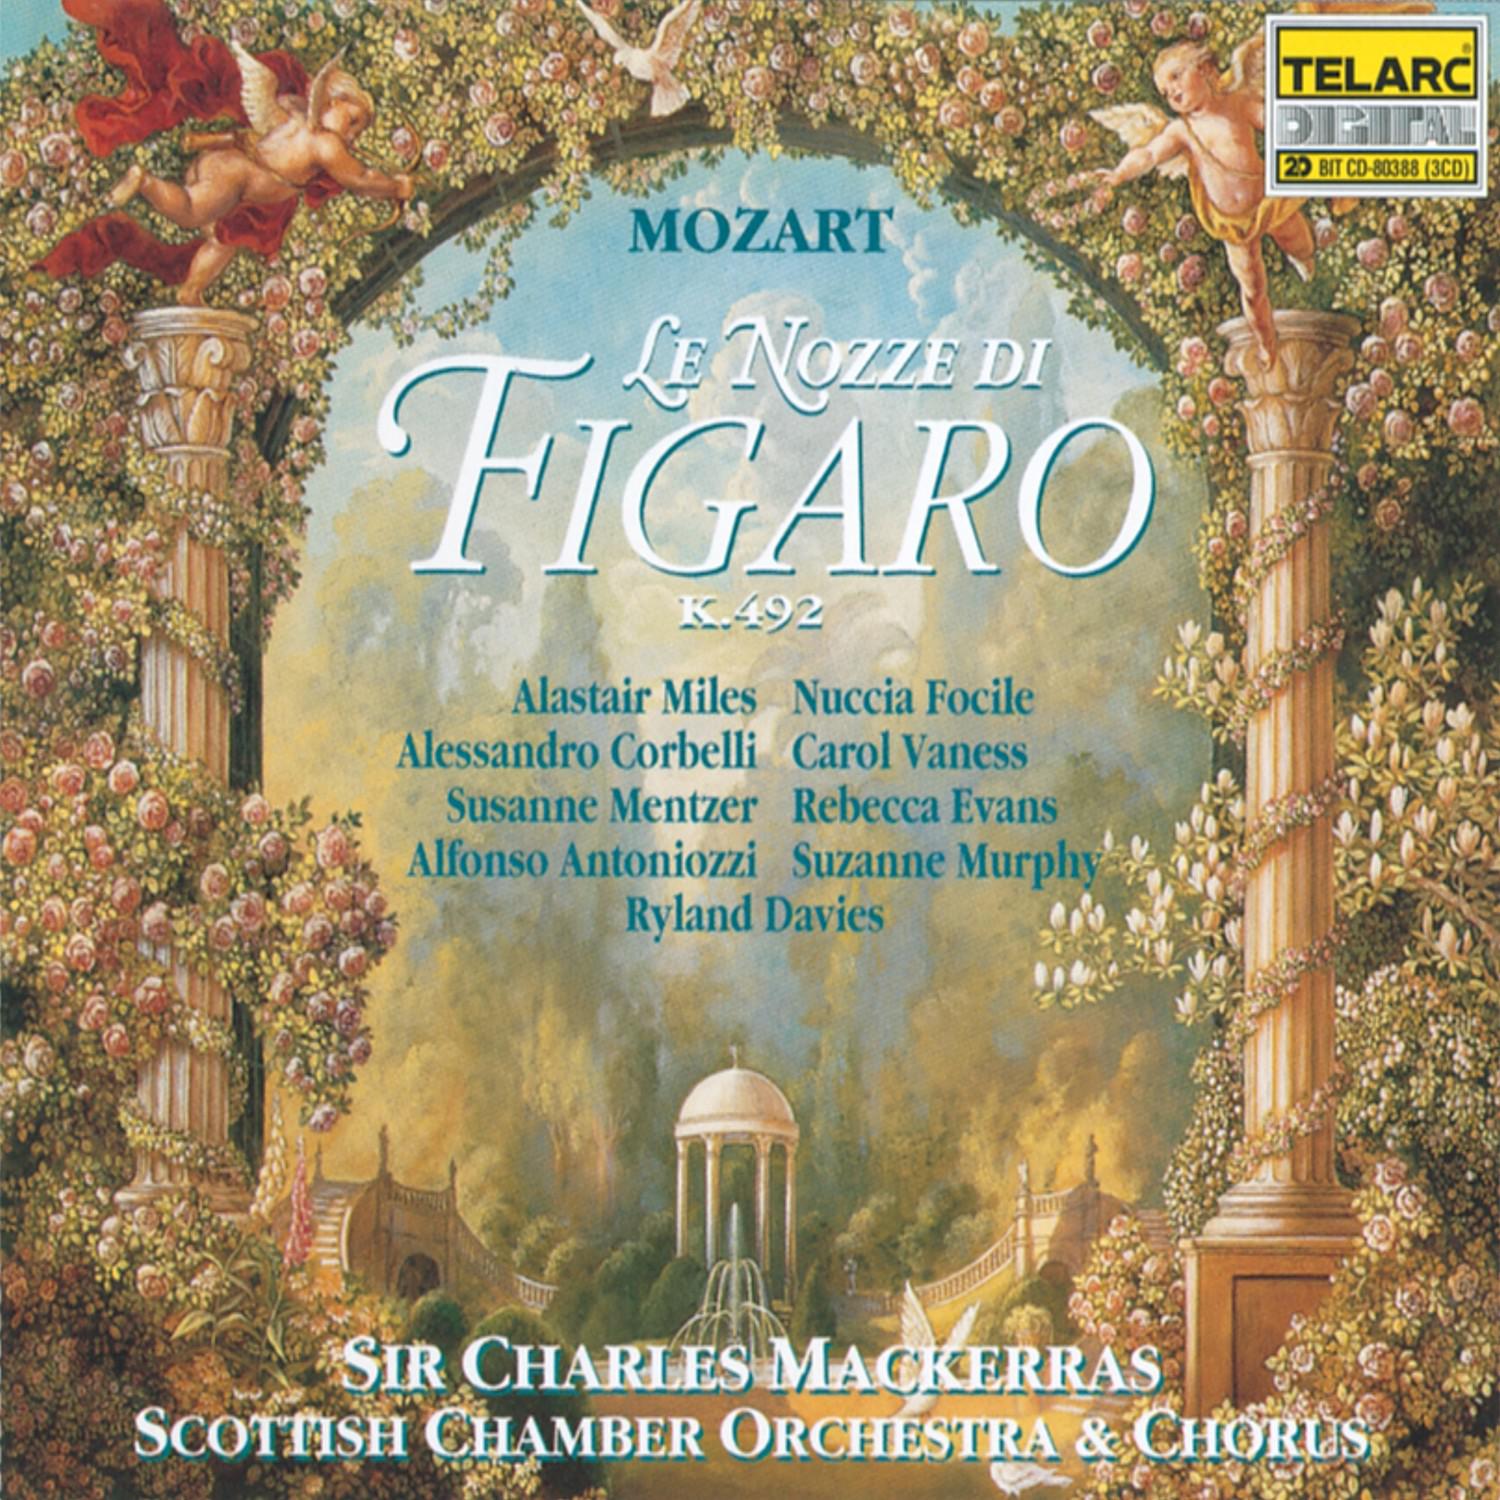 Marriage of Figaro: Recitativo: "Cosa mi narri!"